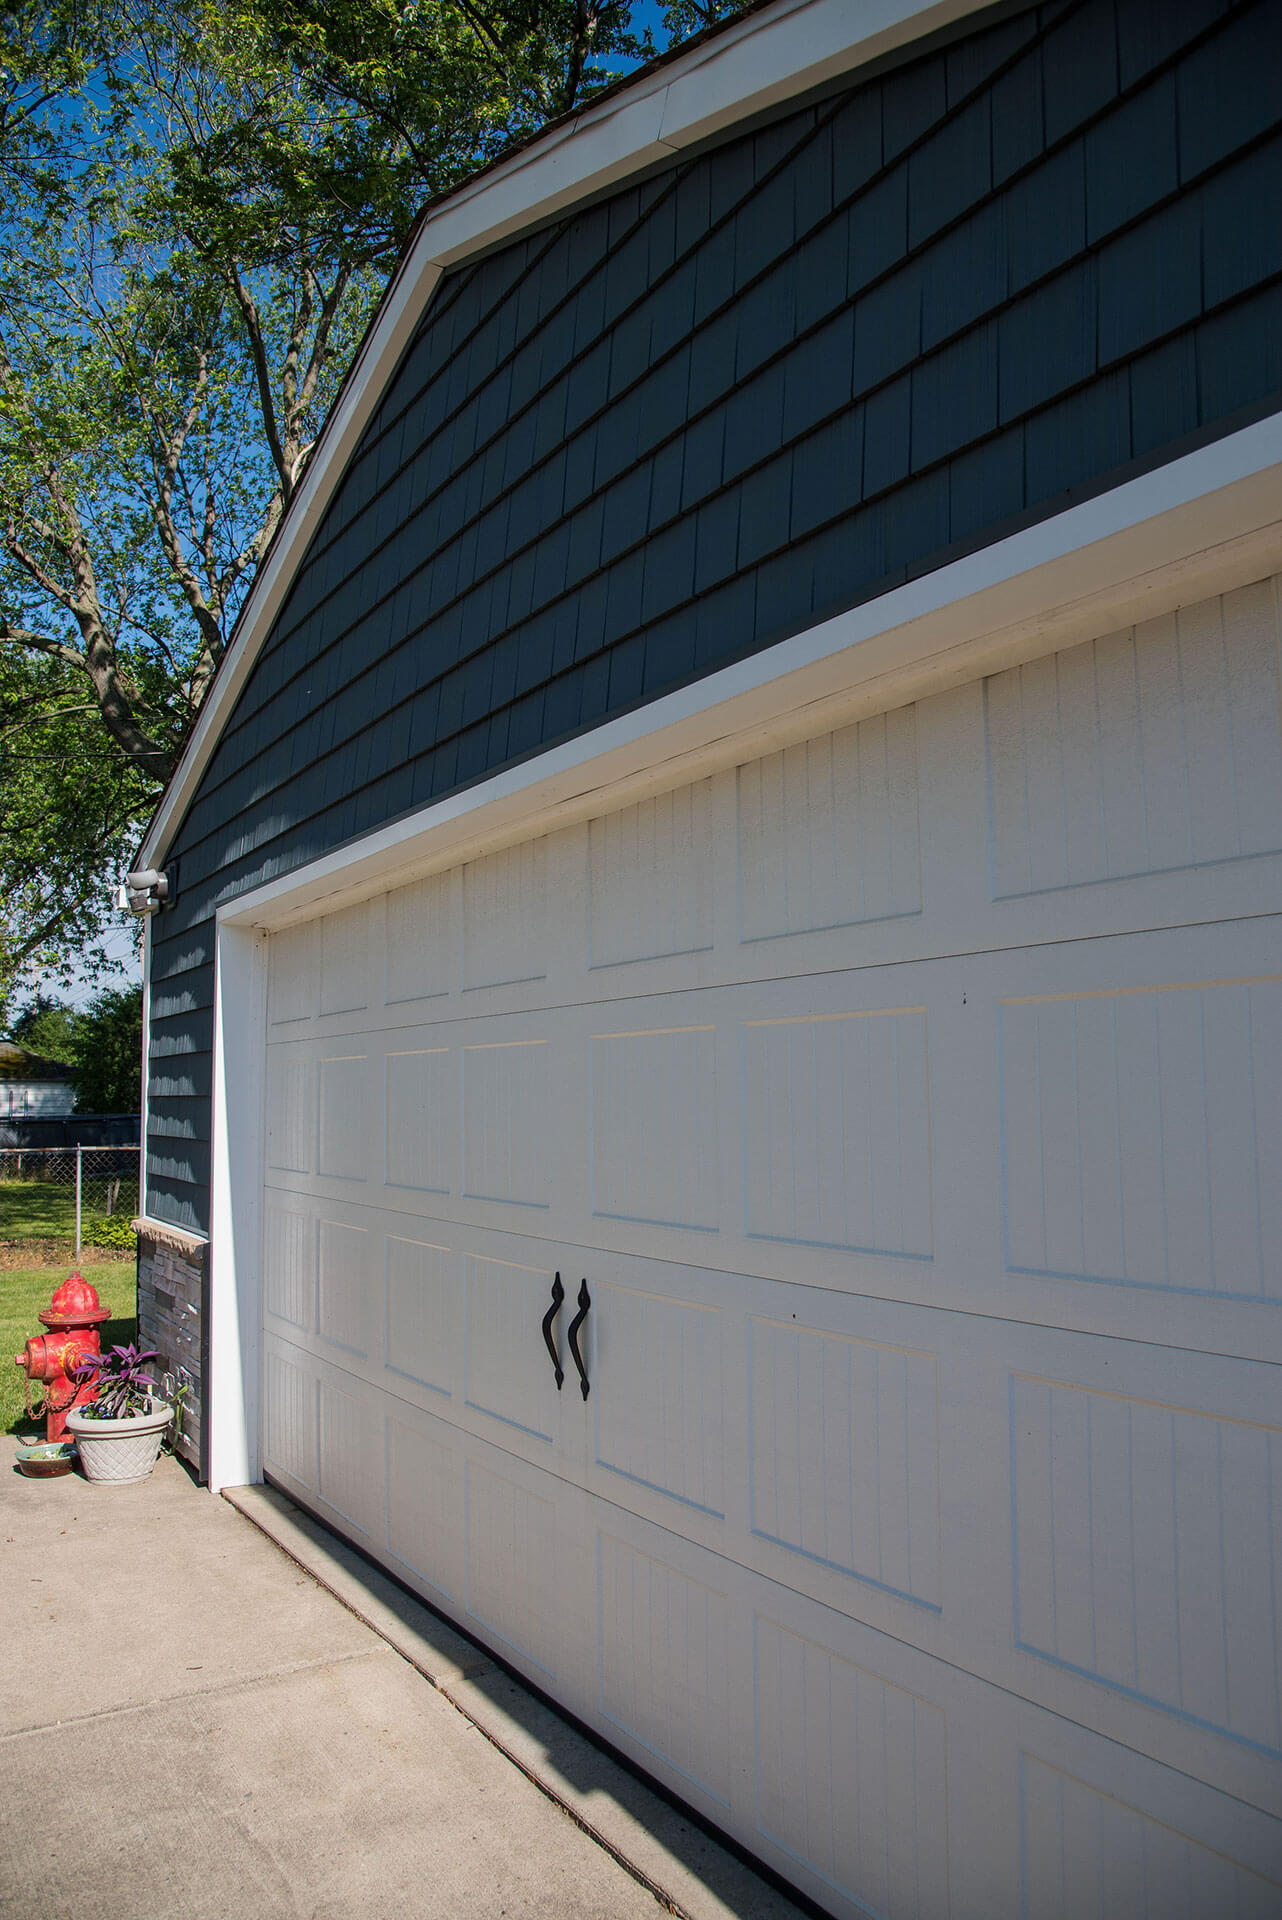 shaker siding installation on garage structure